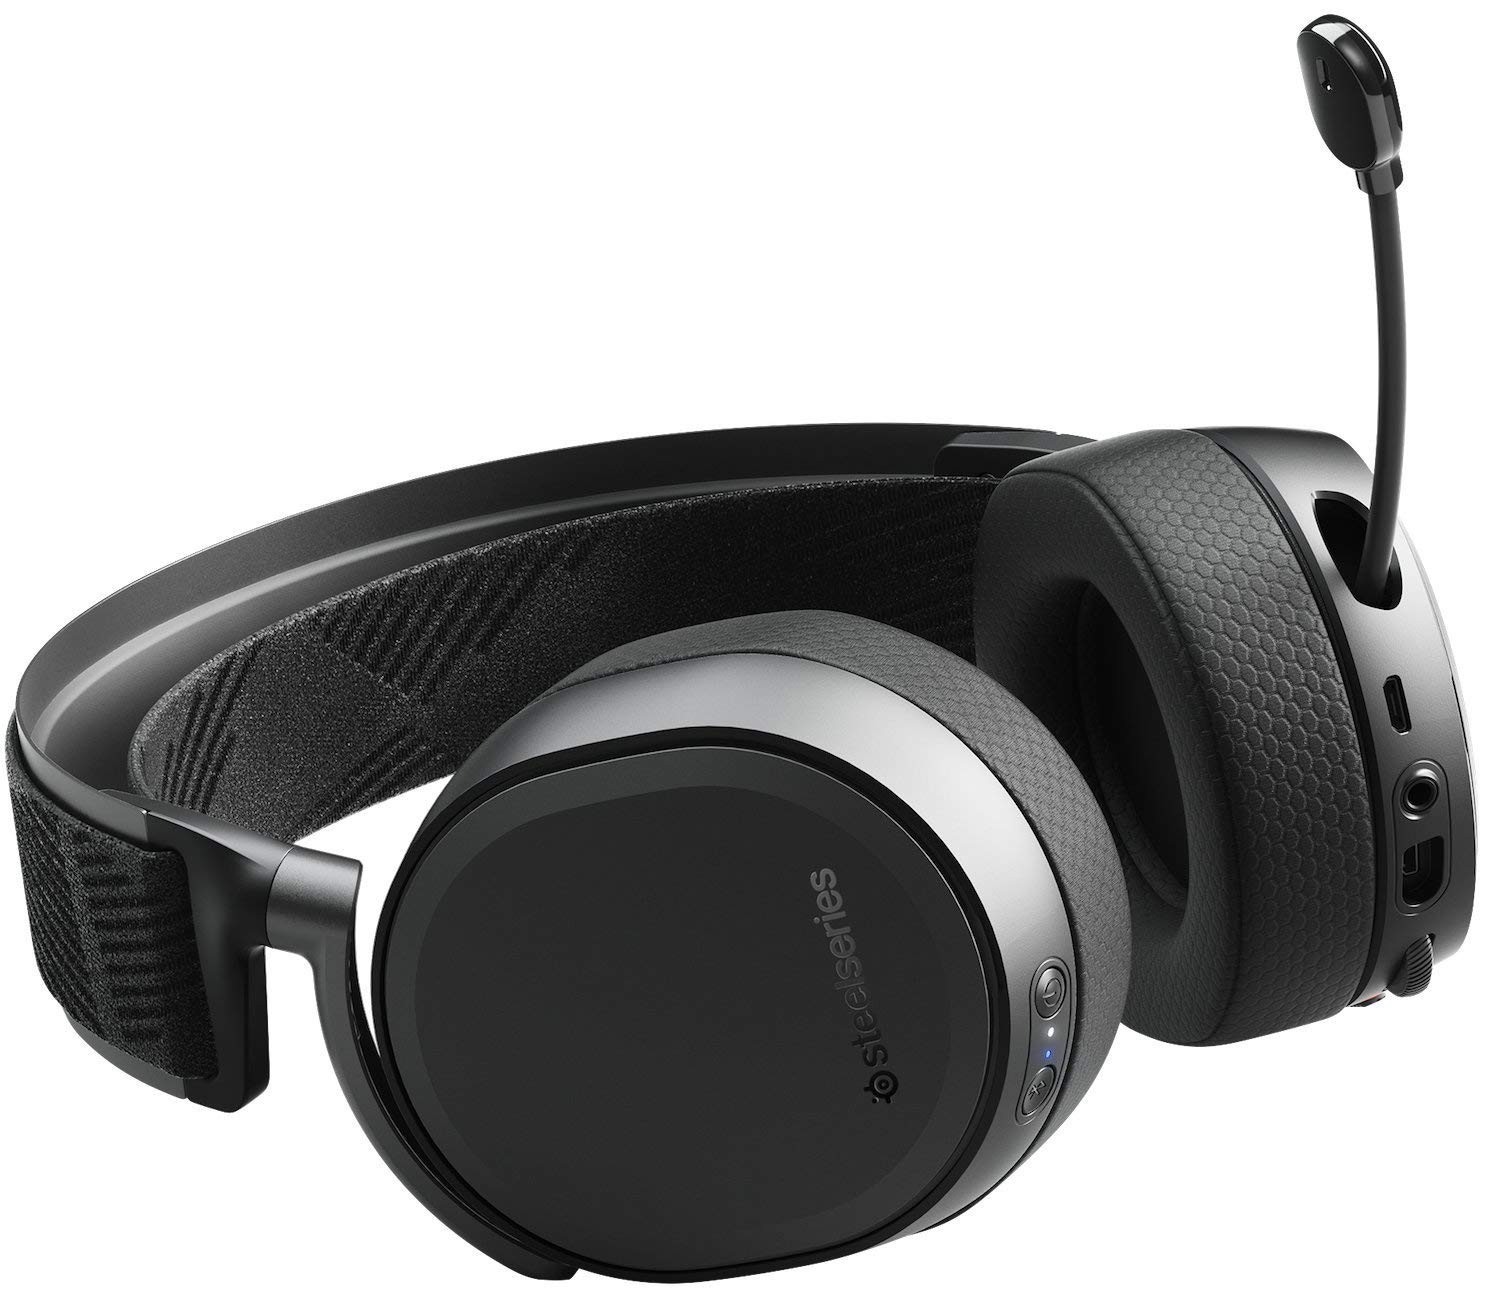 Steelseries Arctis Pro Wireless Black gaming headset